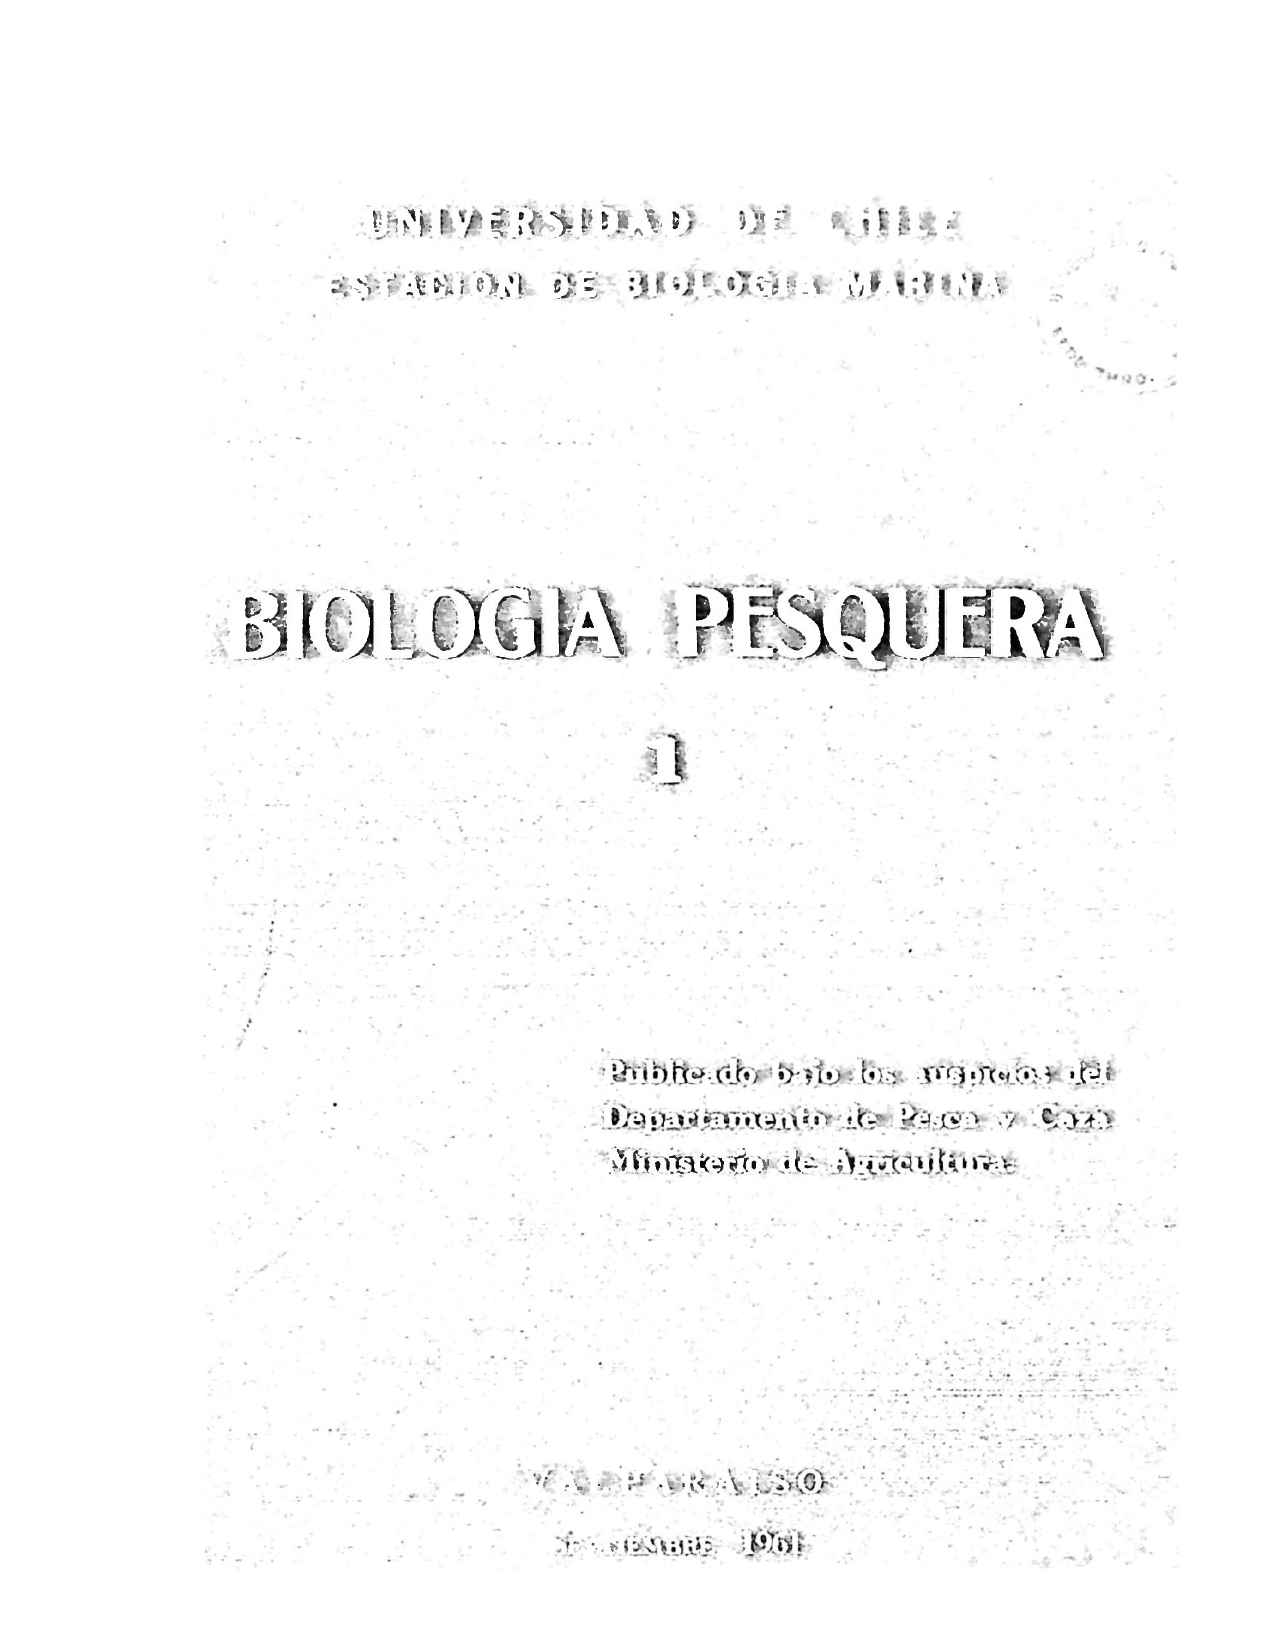 					Ver Núm. 1 (1961): Biología Pesquera
				